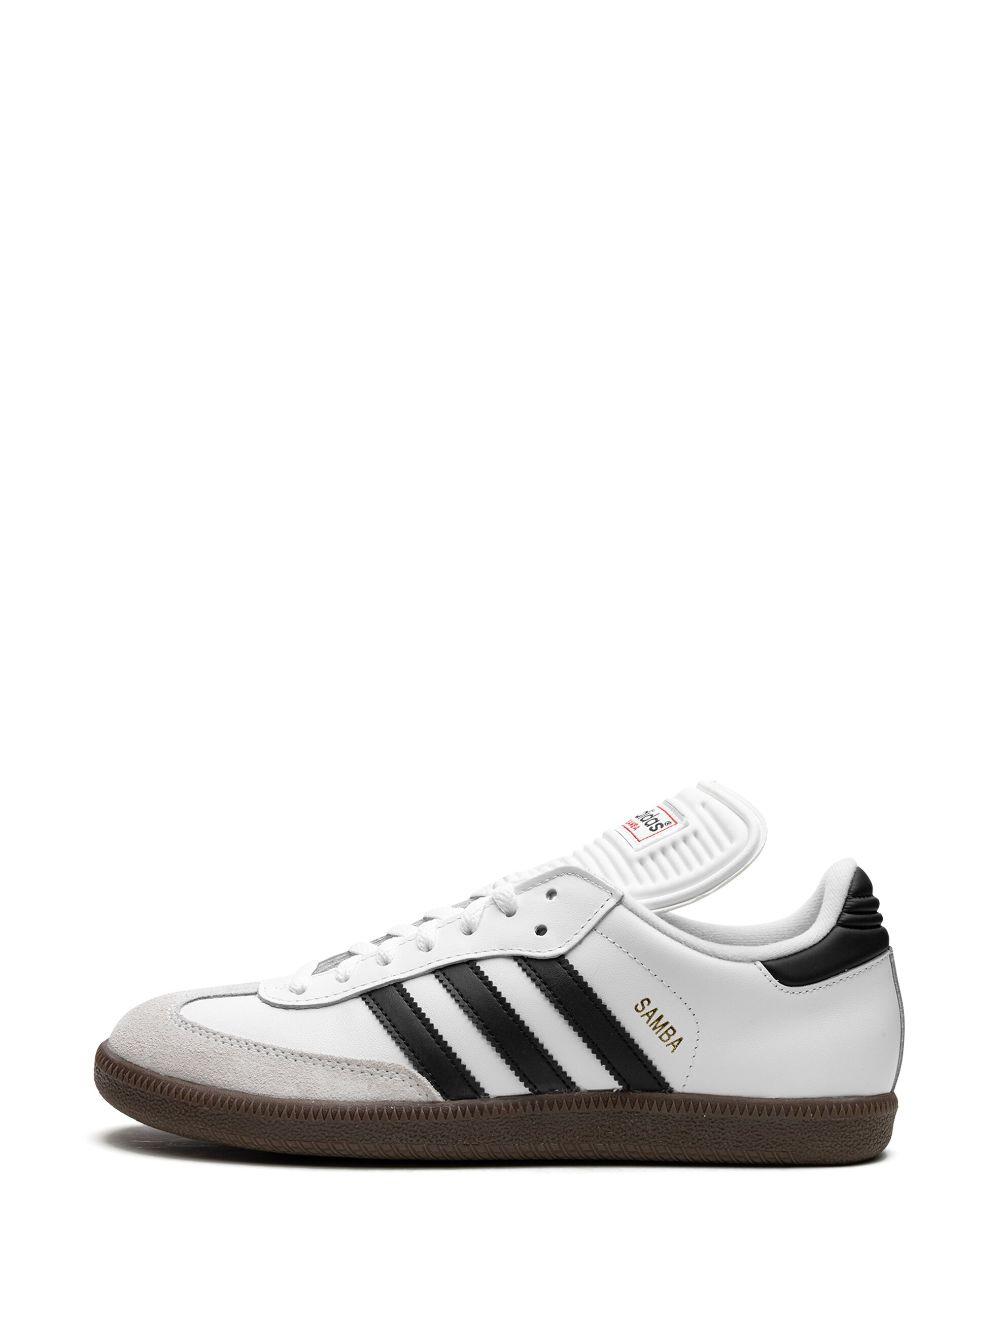 adidas Samba Classic "white/black" Sneakers | Lyst